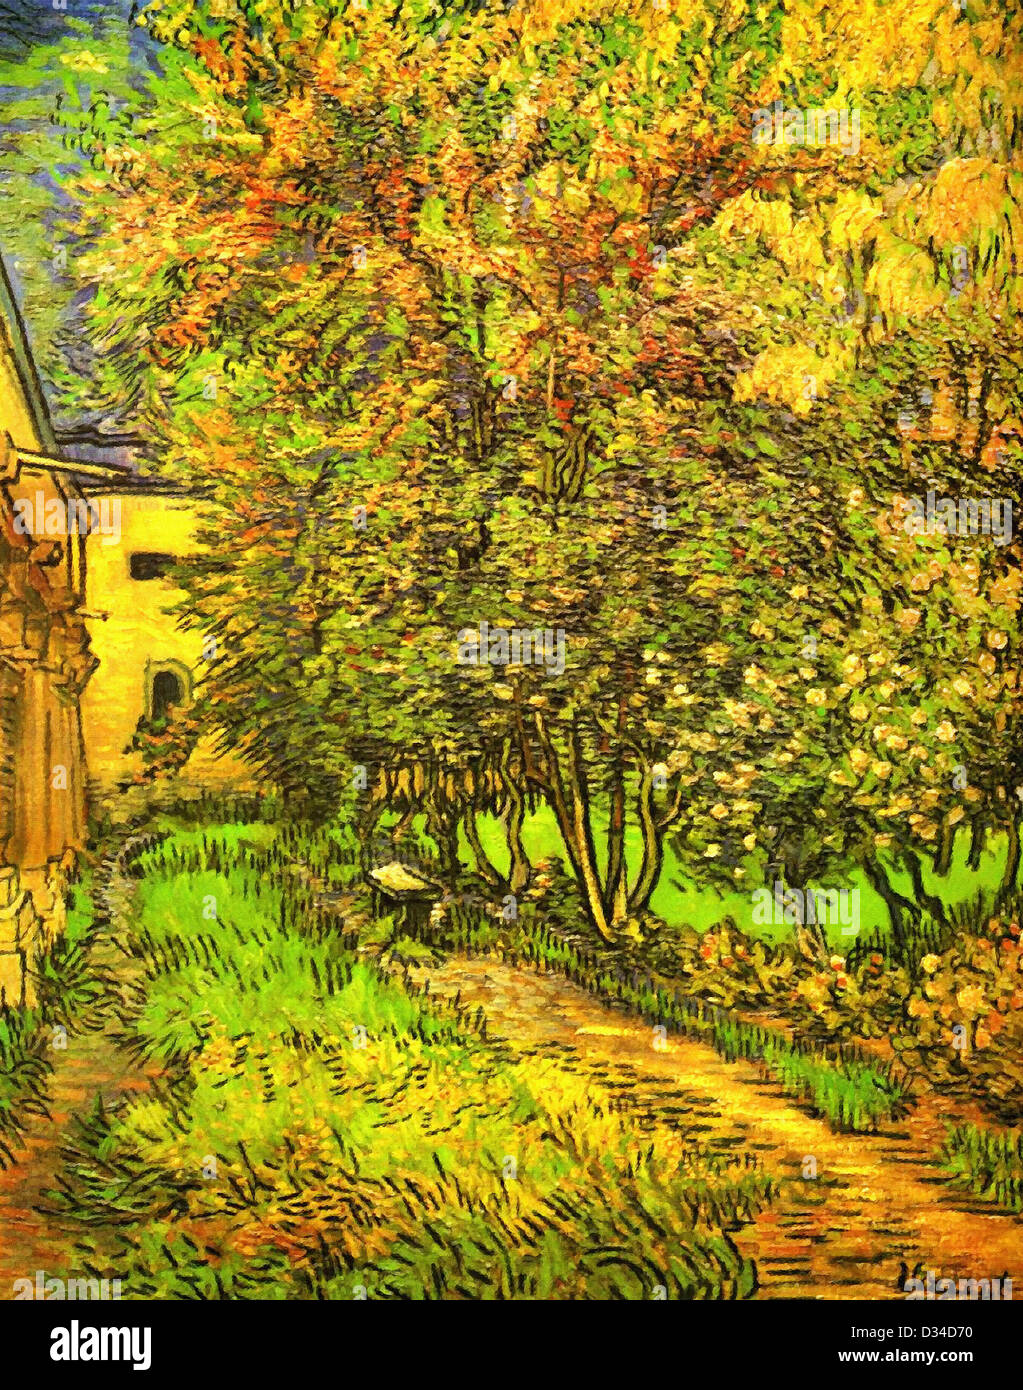 Vincent van Gogh, The Garden of Saint-Paul Hospital. 1889. Post-Impressionism. Oil on canvas.Rijksmuseum Kröller-Müller, Otterlo Stock Photo